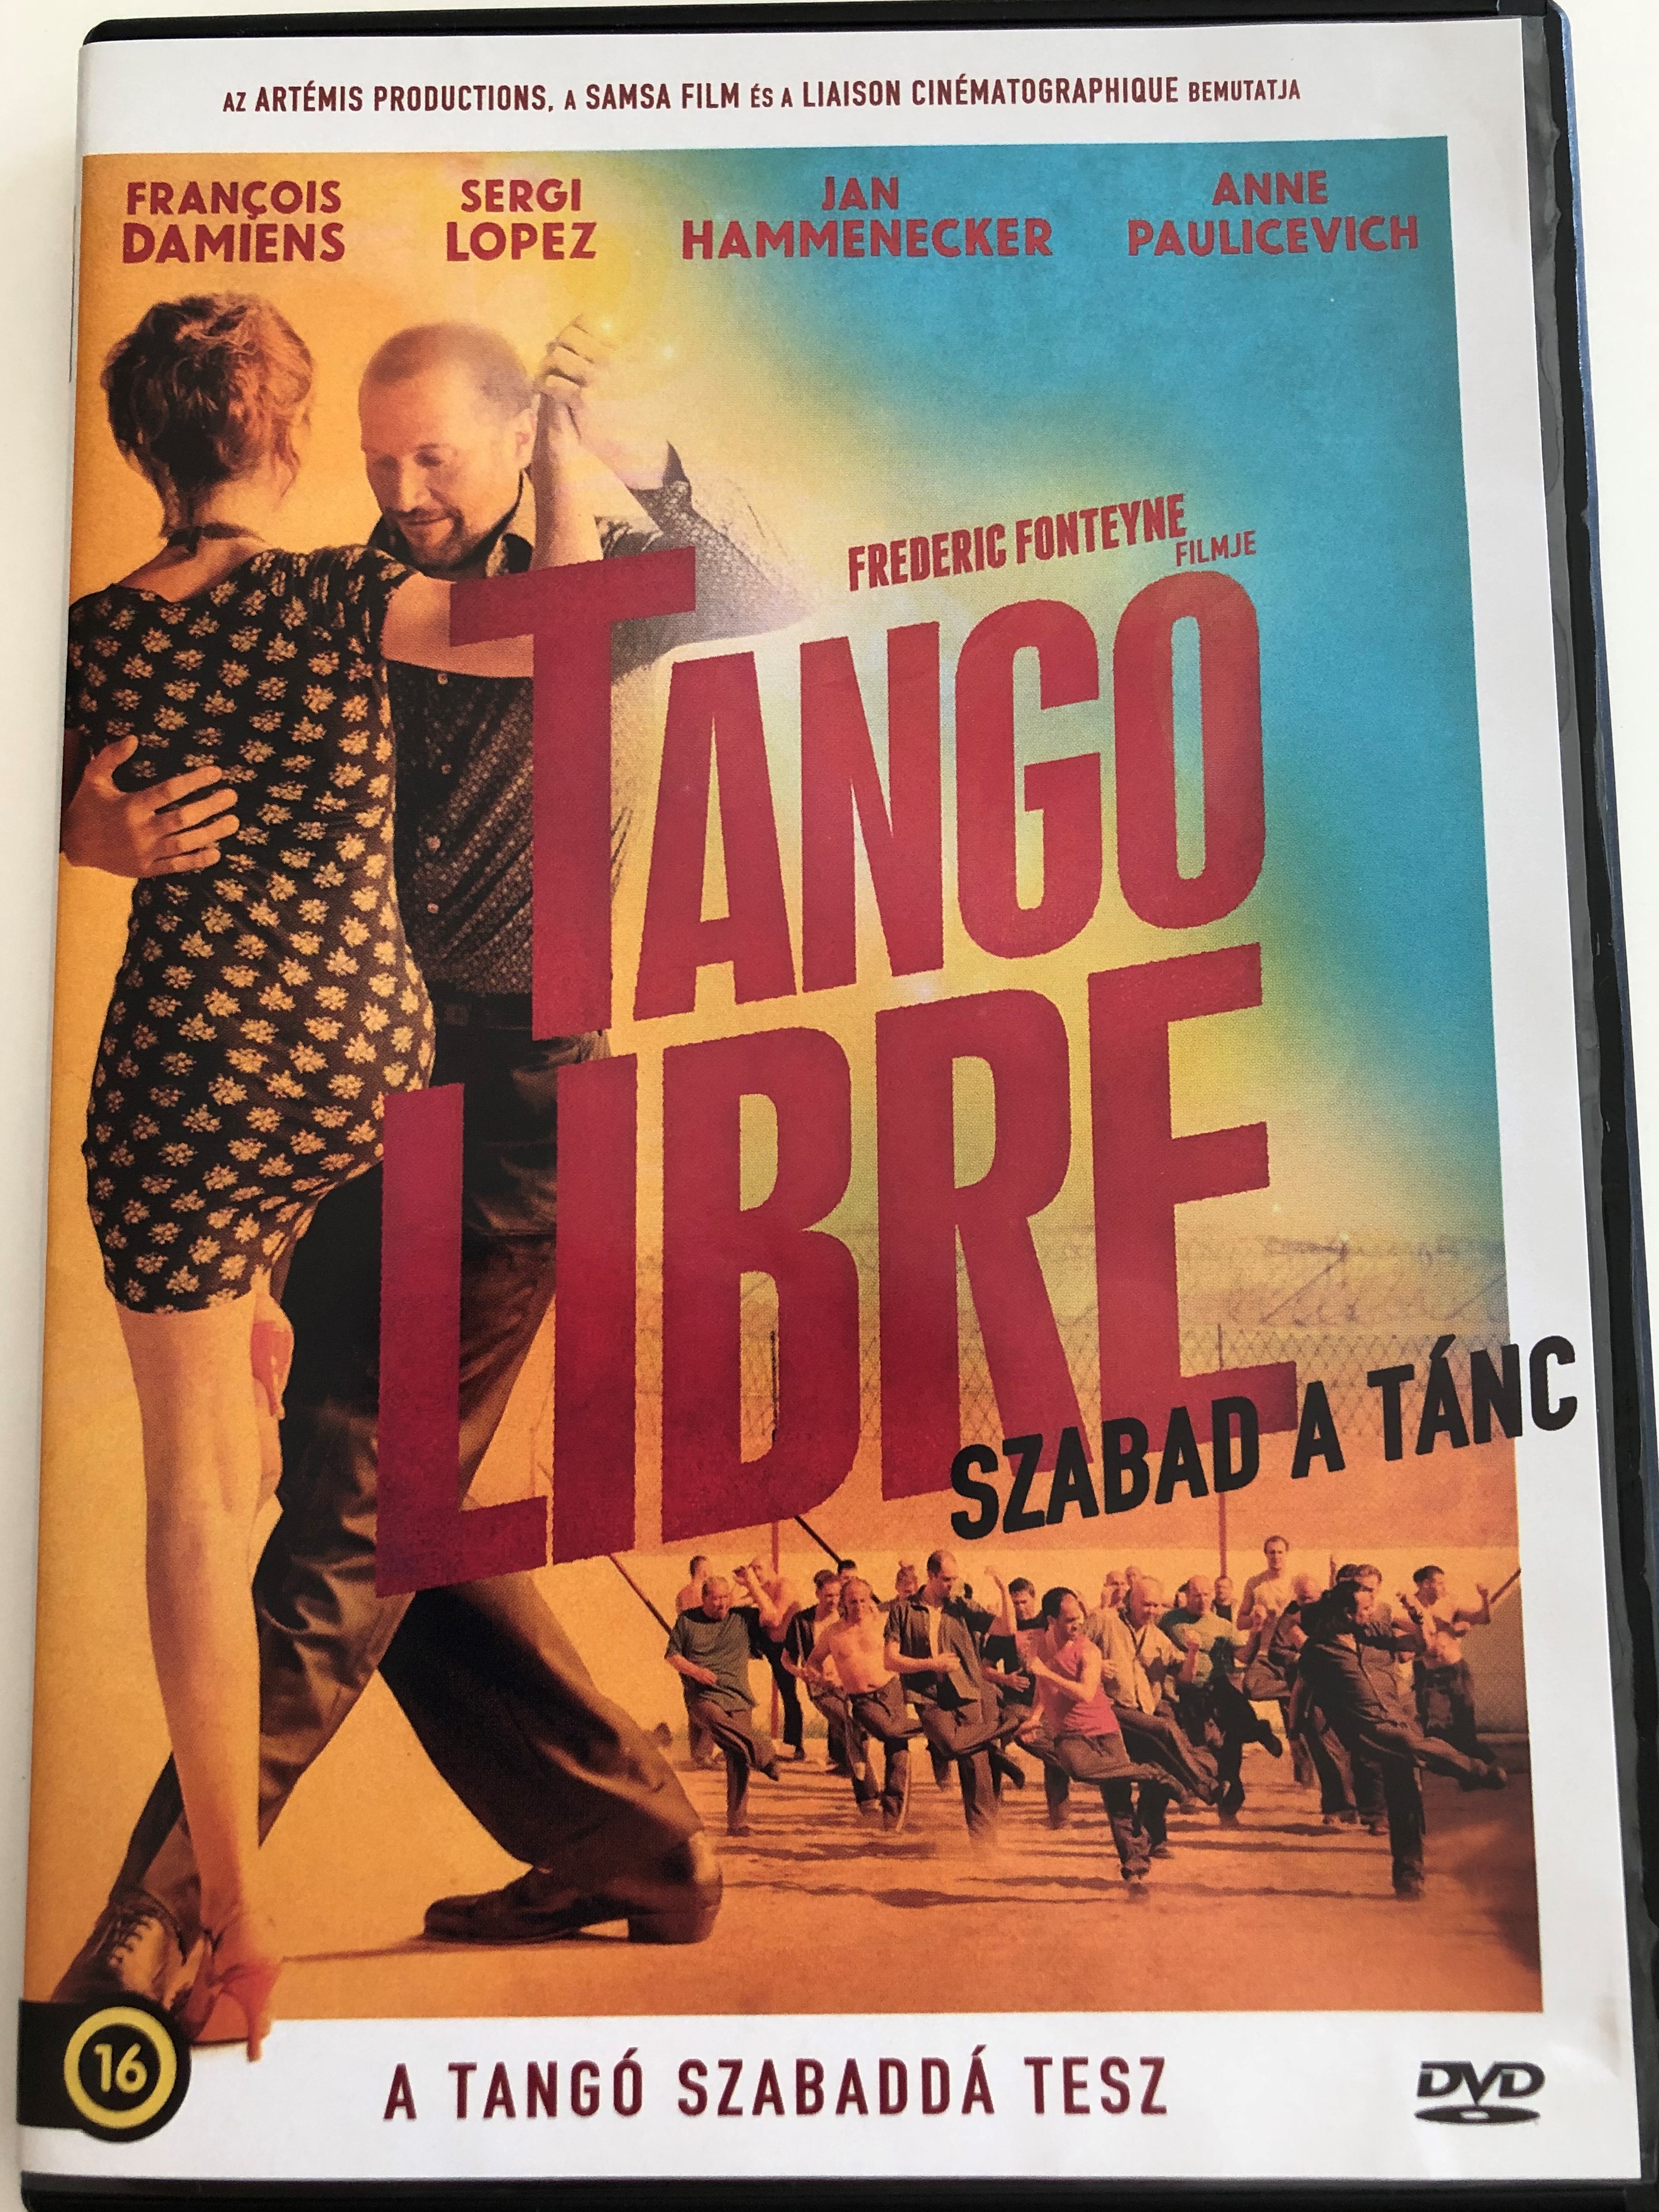 tango-libre-dvd-2012-szabad-a-t-nc-directed-by-fr-d-ric-fonteyne-starring-fran-ois-damiens-sergi-l-pez-jan-hammenecker-anne-paulicevich-zacharie-chasseriaud-chicho-frumboli-pablo-tegli-1-.jpg